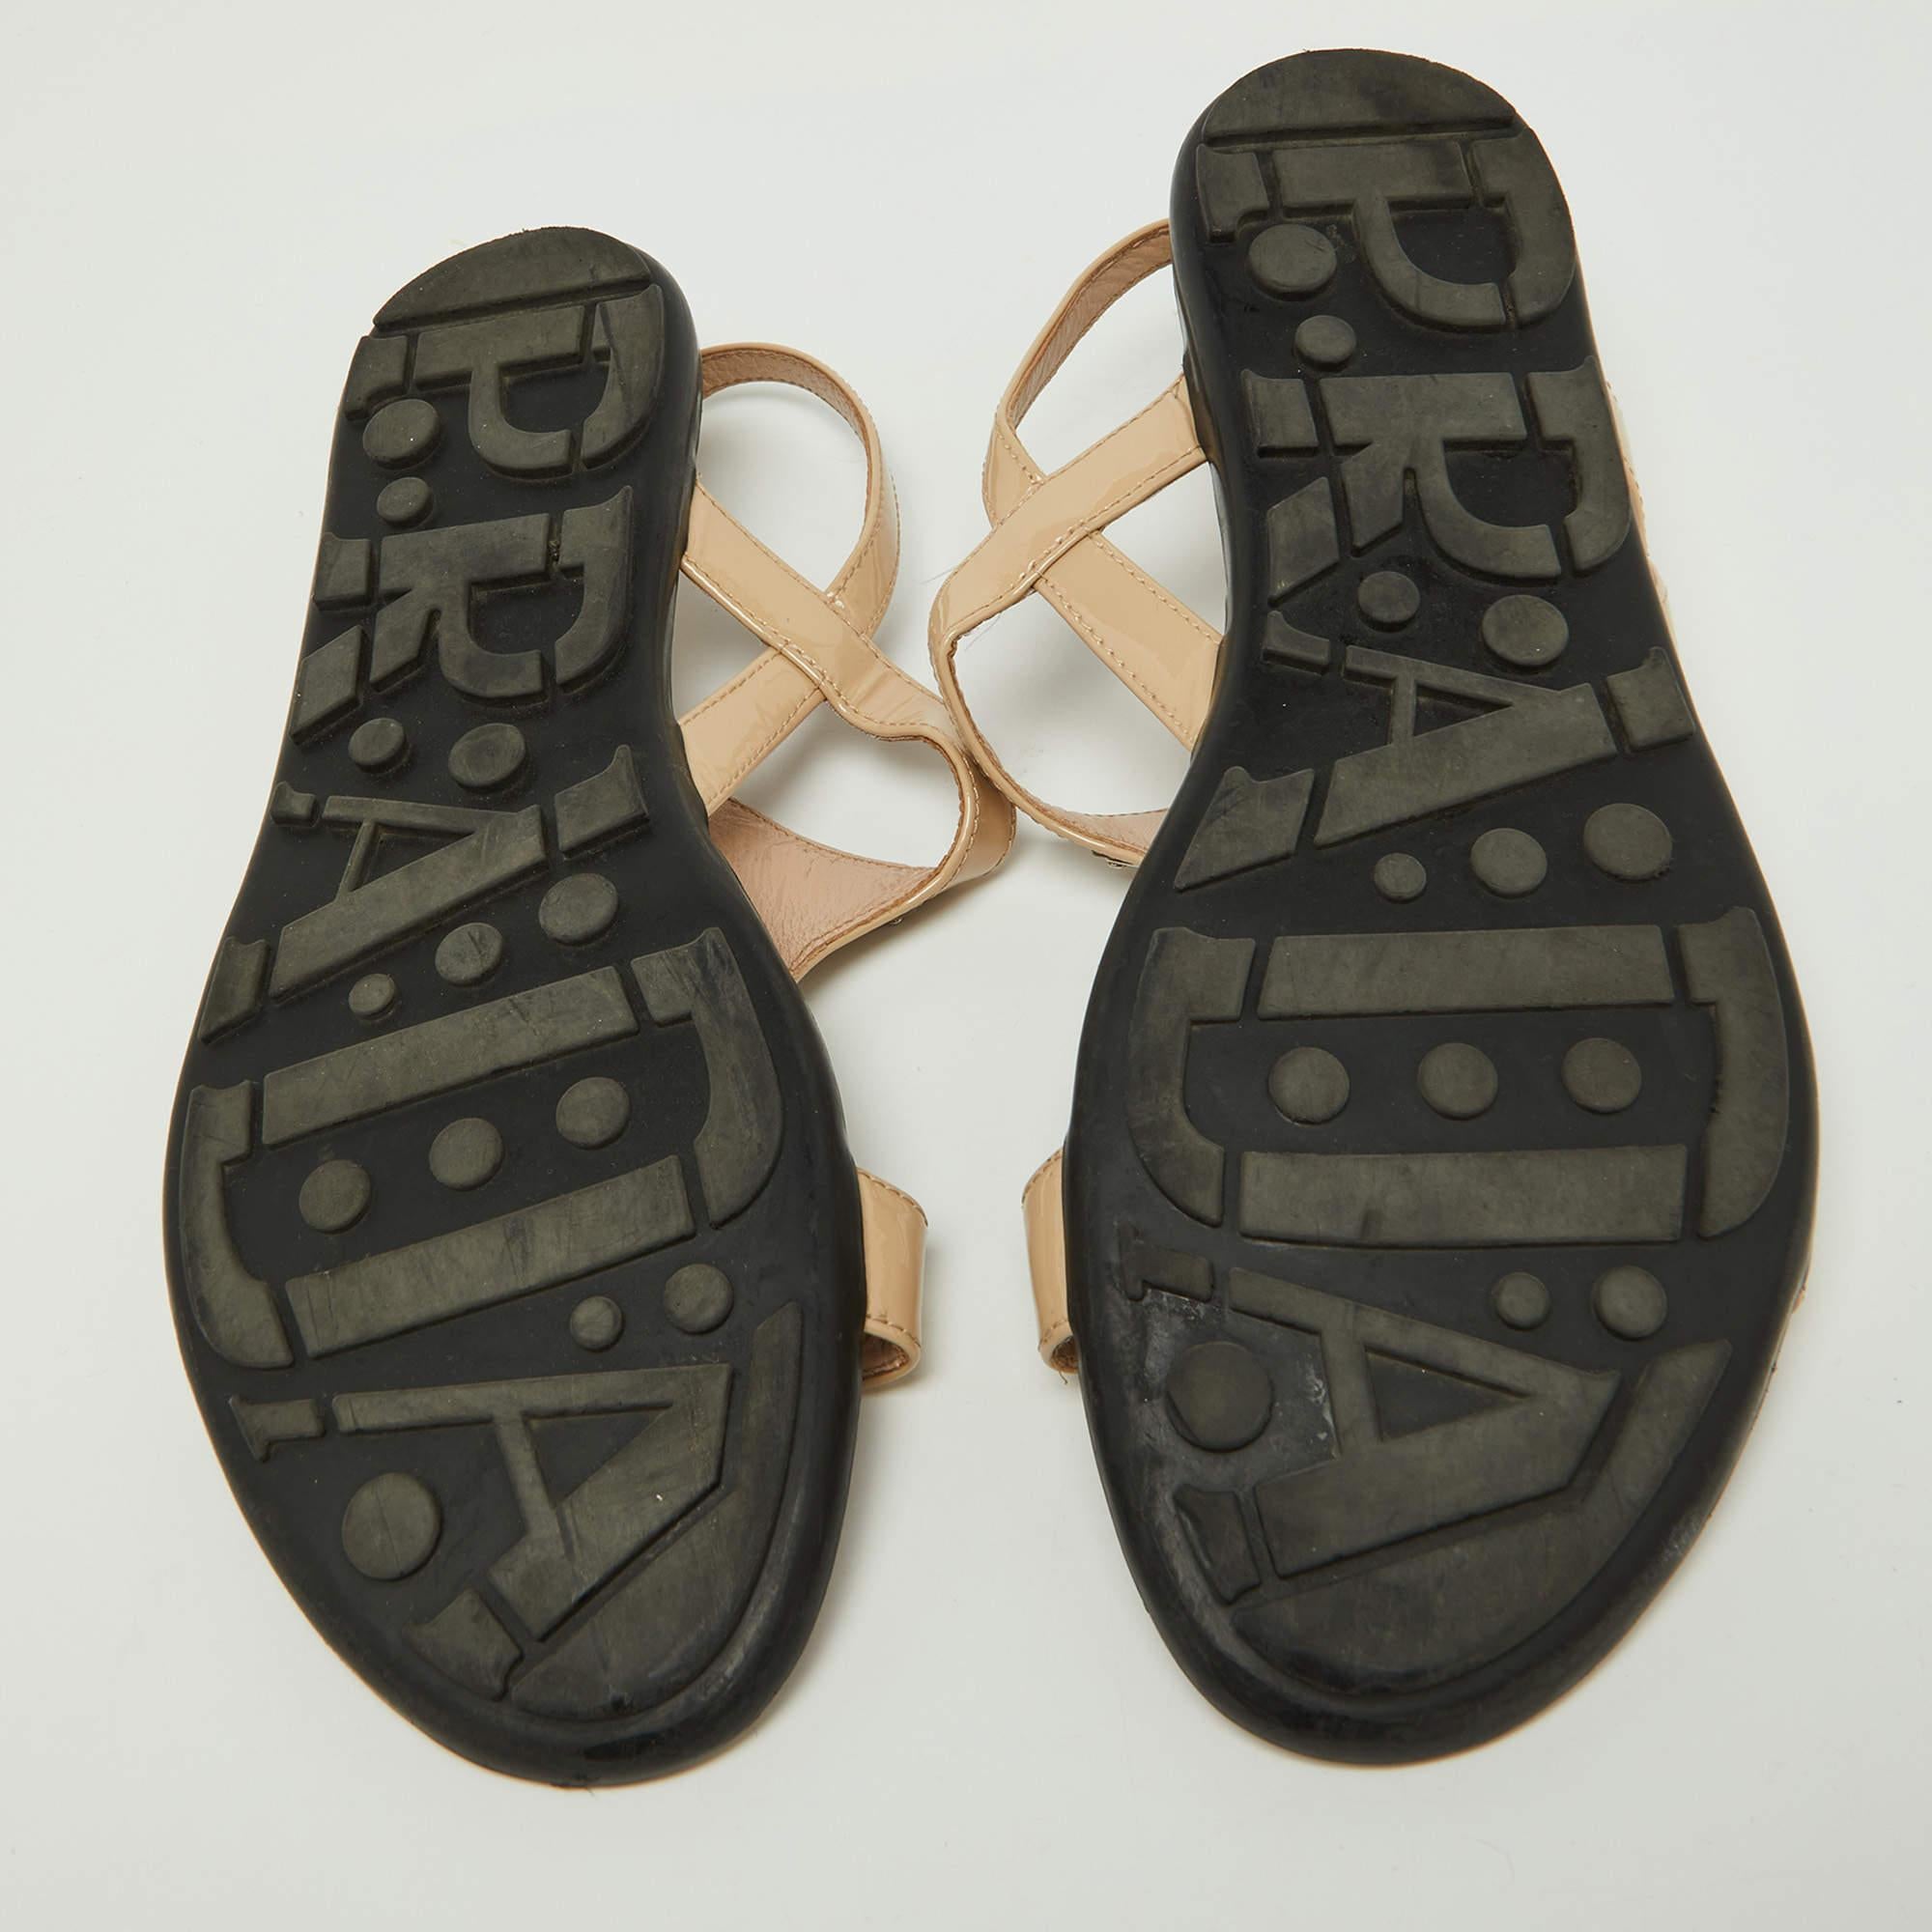 Prada Beige Patent Leather Flat Sandals Size 39 5